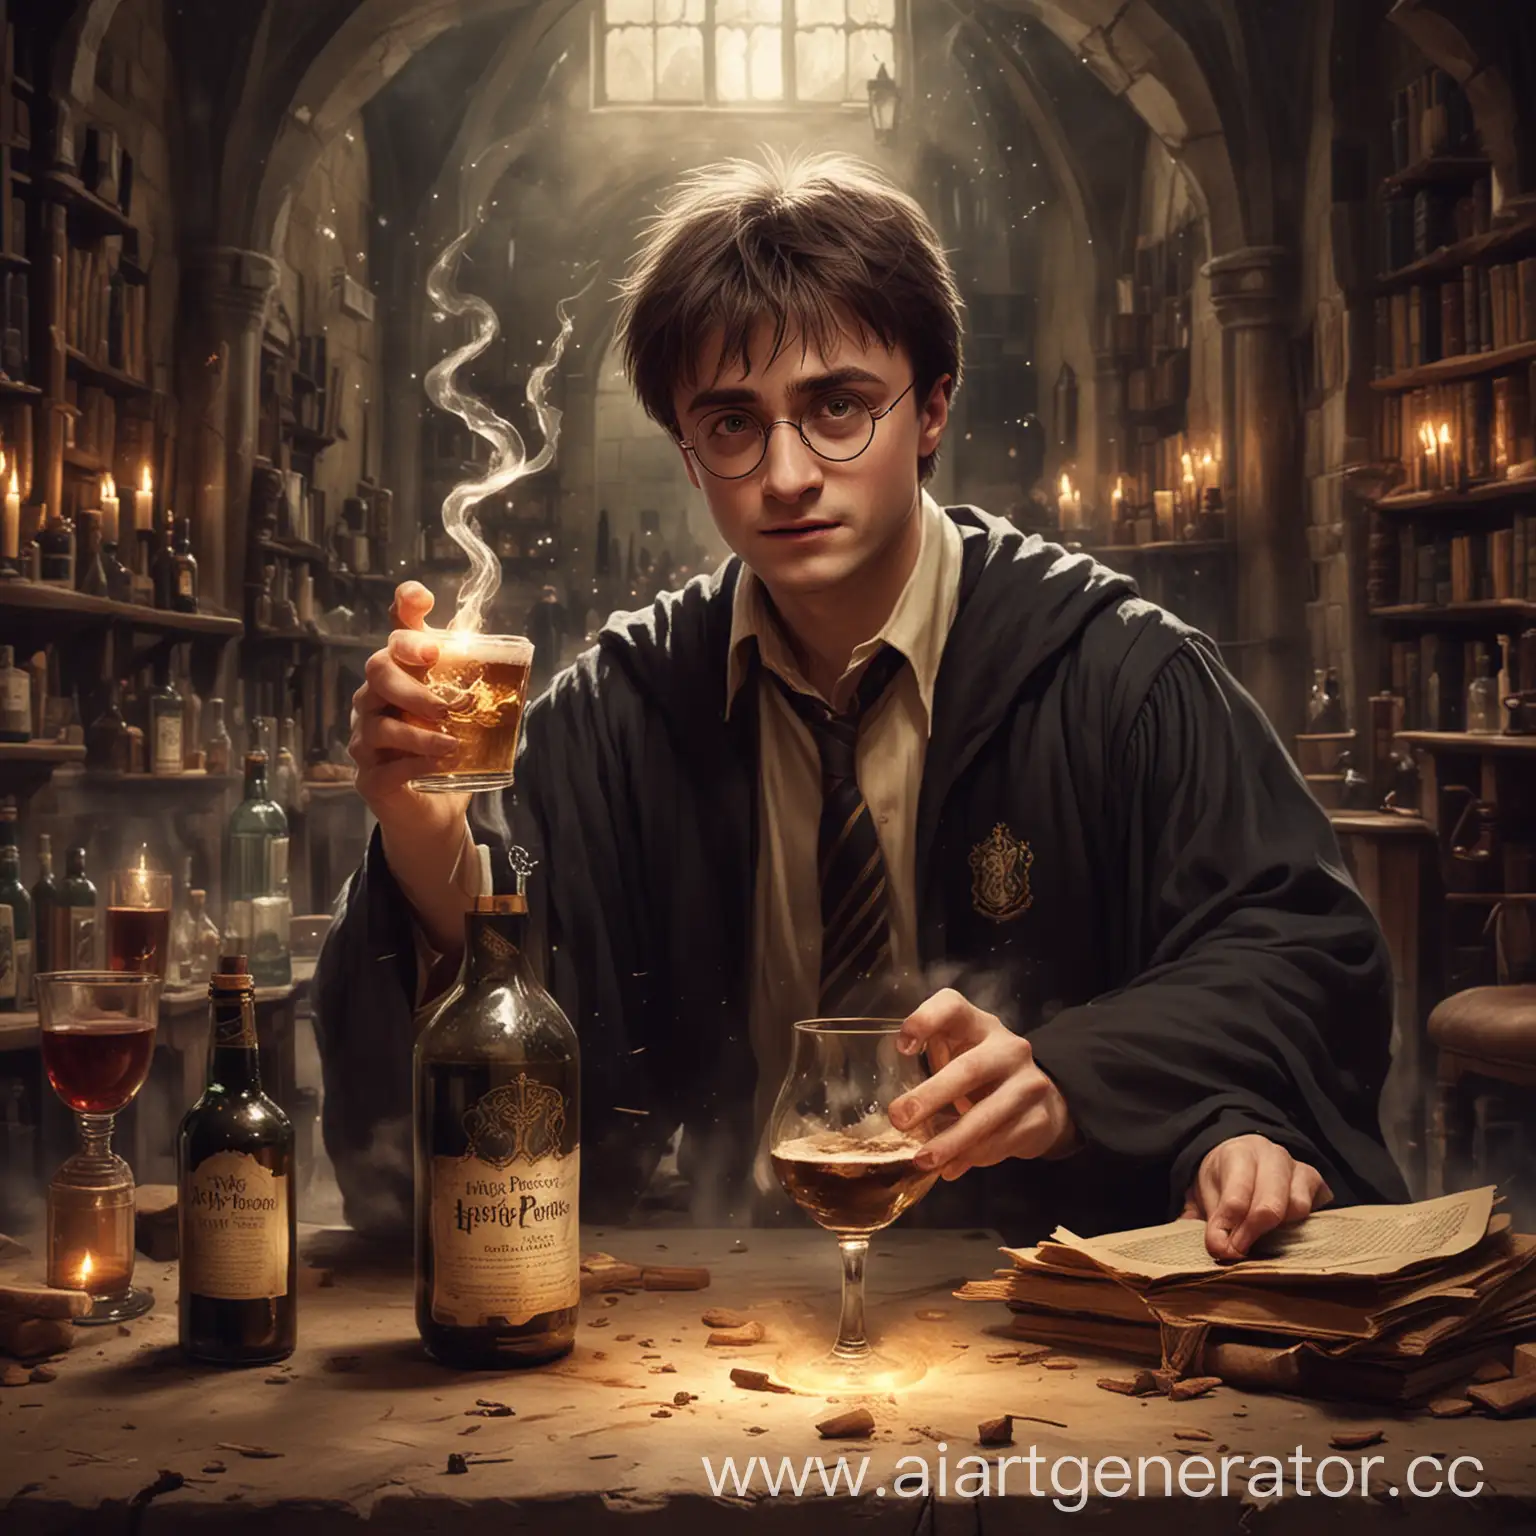 Drunk-Harry-Potter-Conjures-Lumos-Maximus